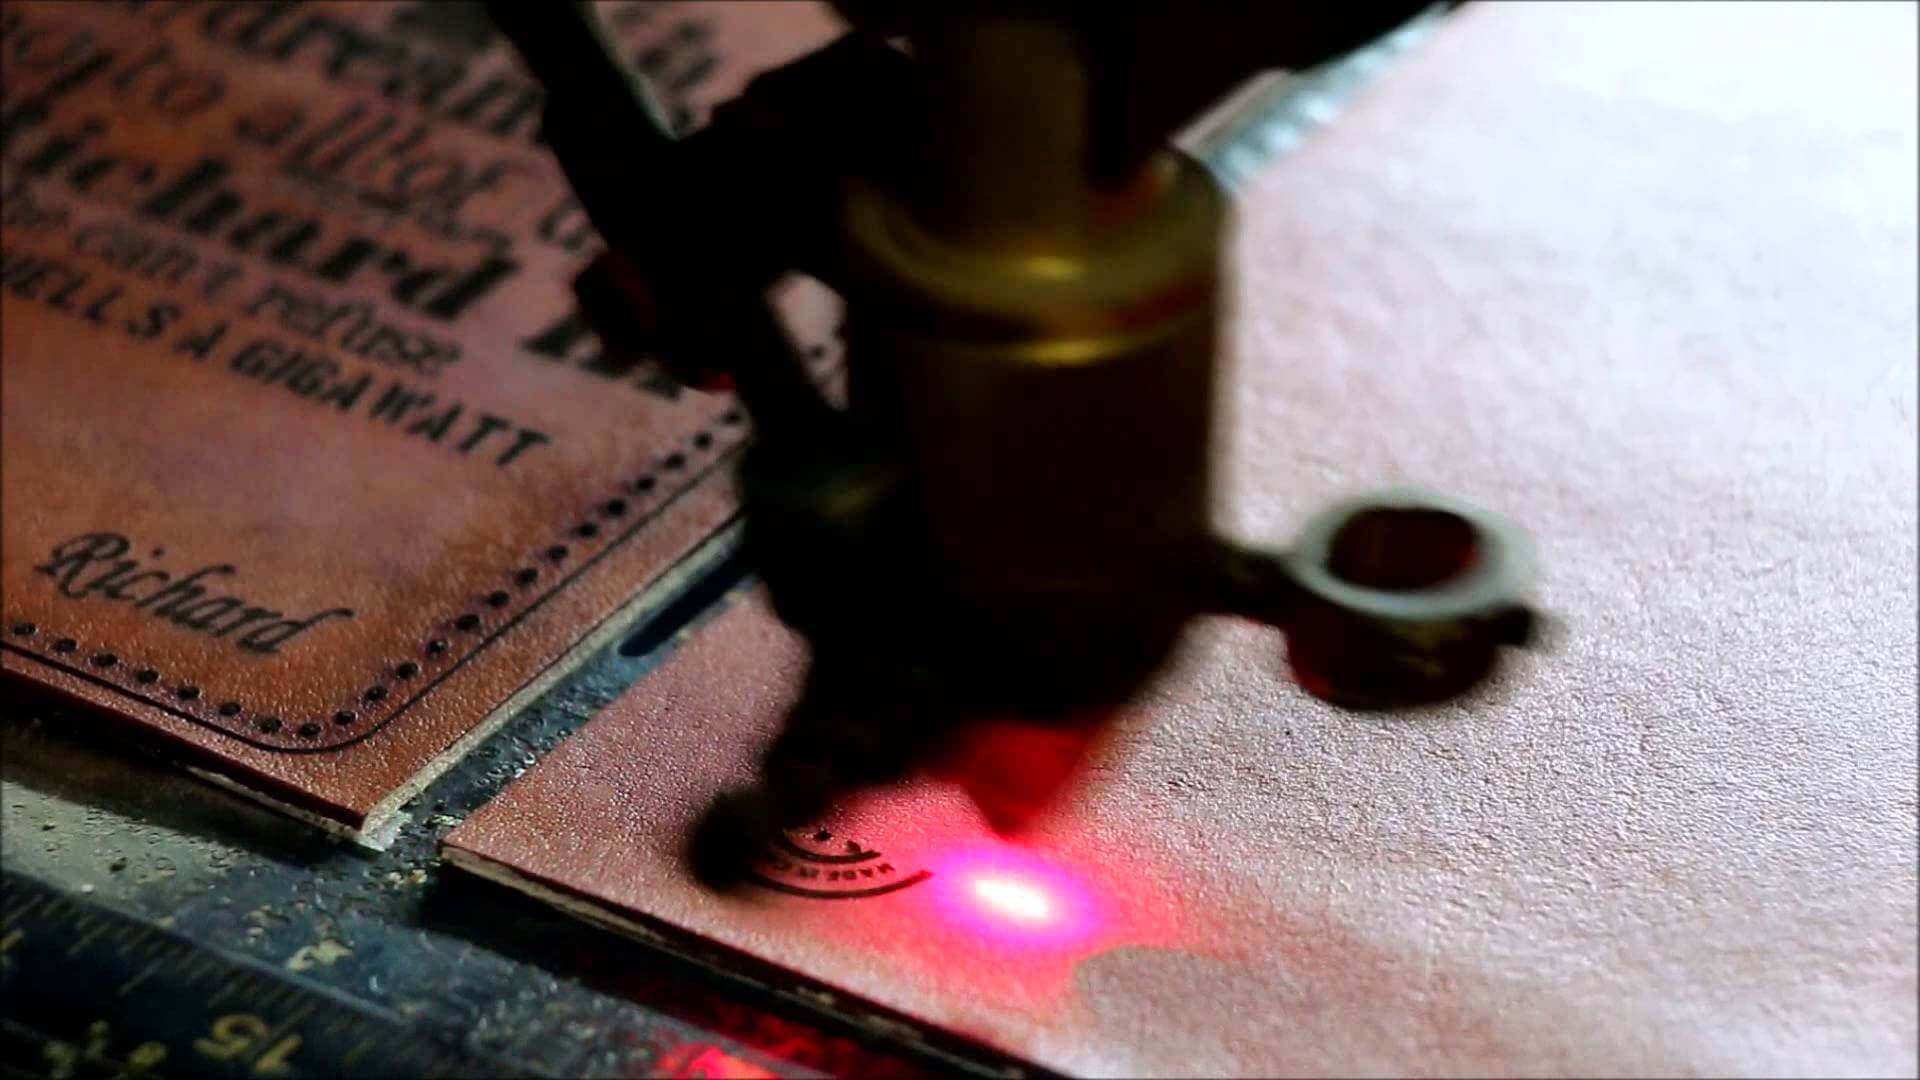 Laser engraving on dark brown leather